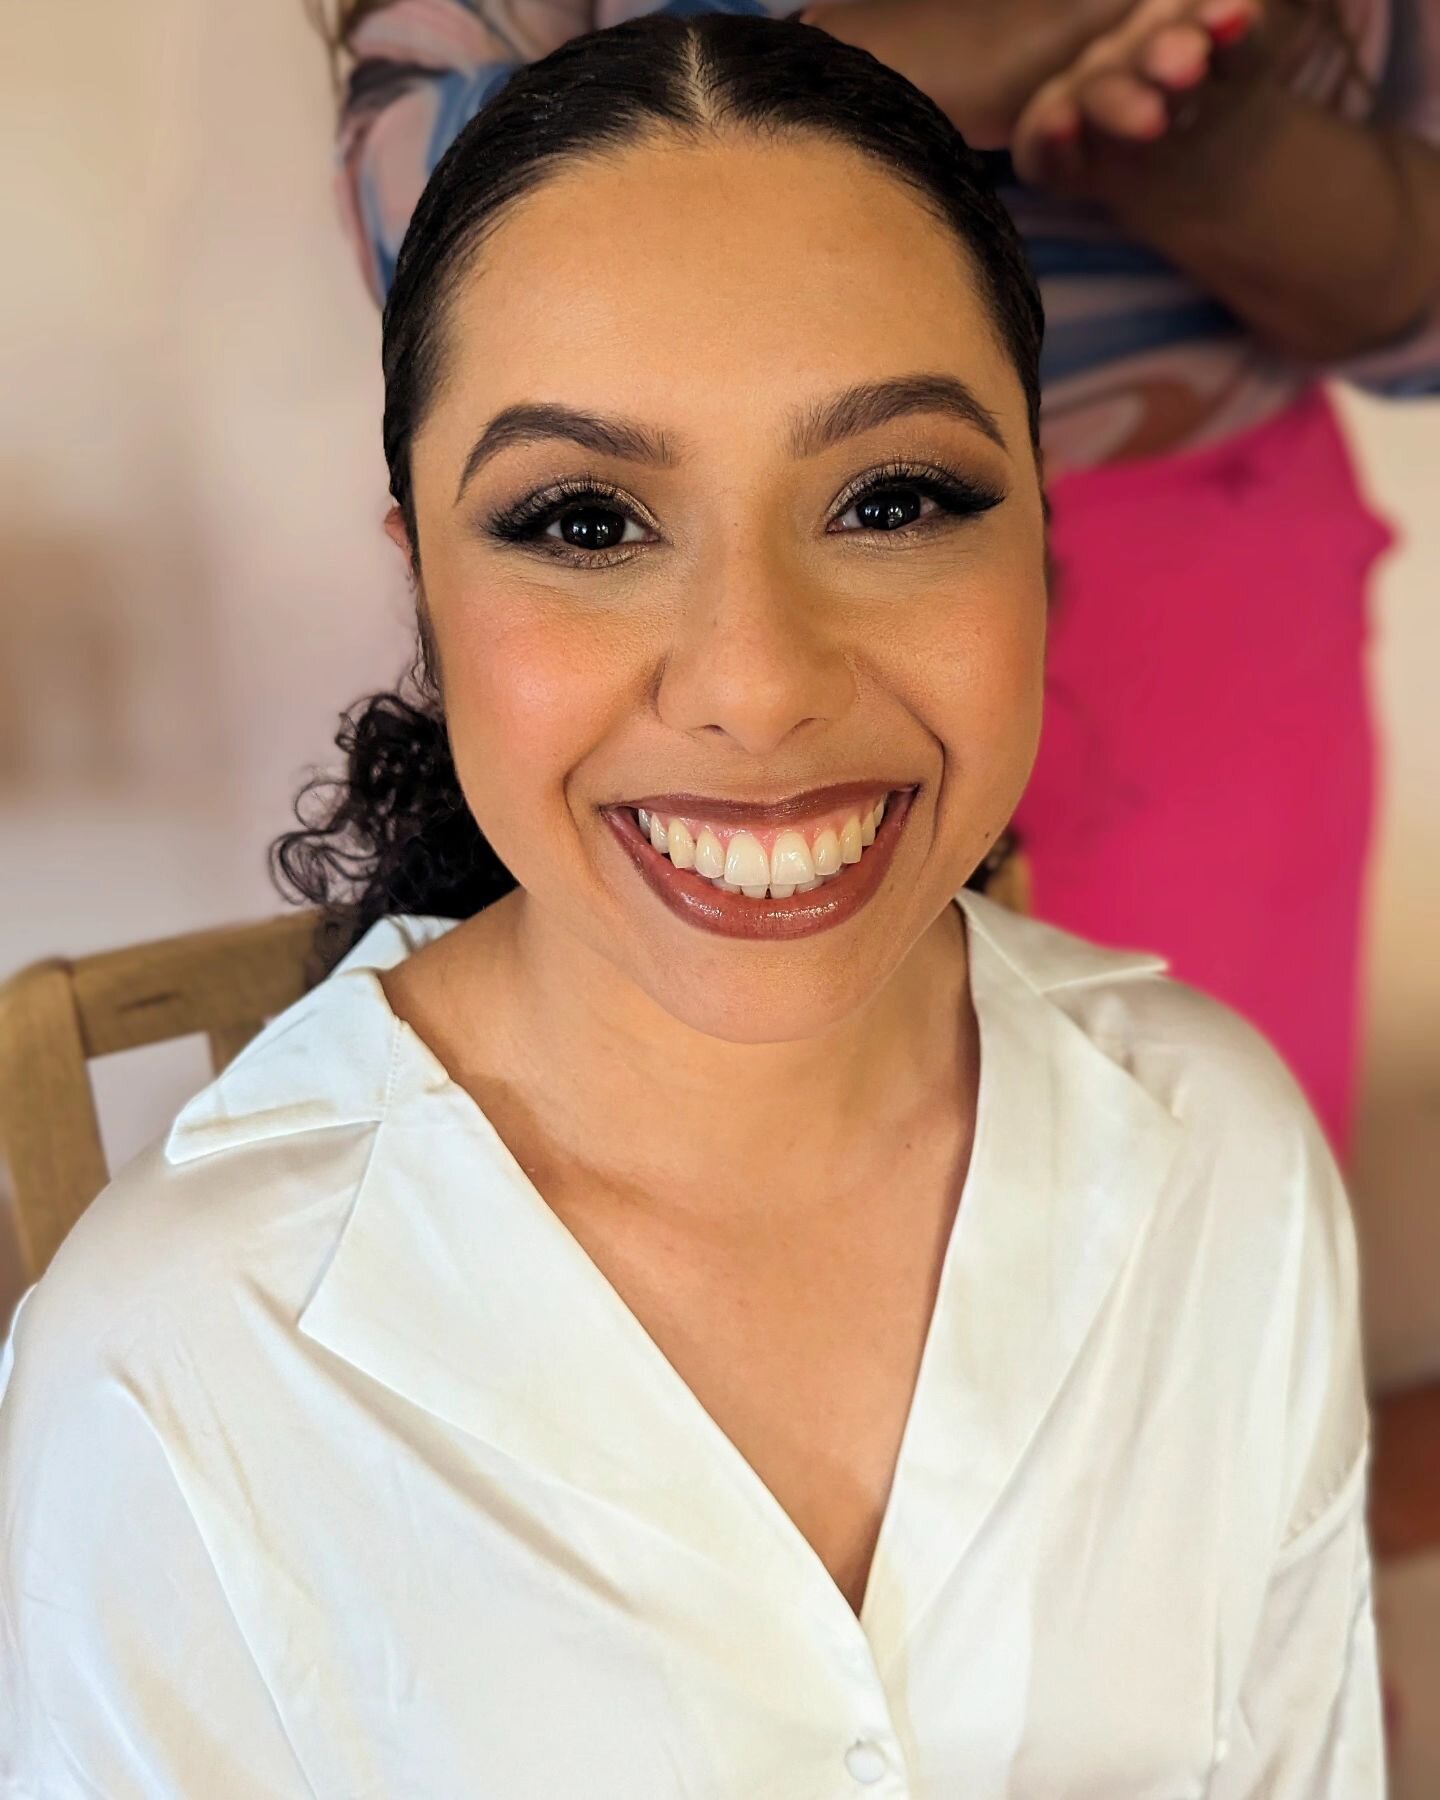 What a winning smile 😁

Makeup by me
Hair @rumbiemutsiwa

#sydneymakeupartist #sydneymakeup&nbsp; #makeupartist #instabeauty #freelancemakeupartist #bridalmakeup #bride #weddingmakeup #daytimemakeup #bridesmaidmakeup #charlottemcleodmua